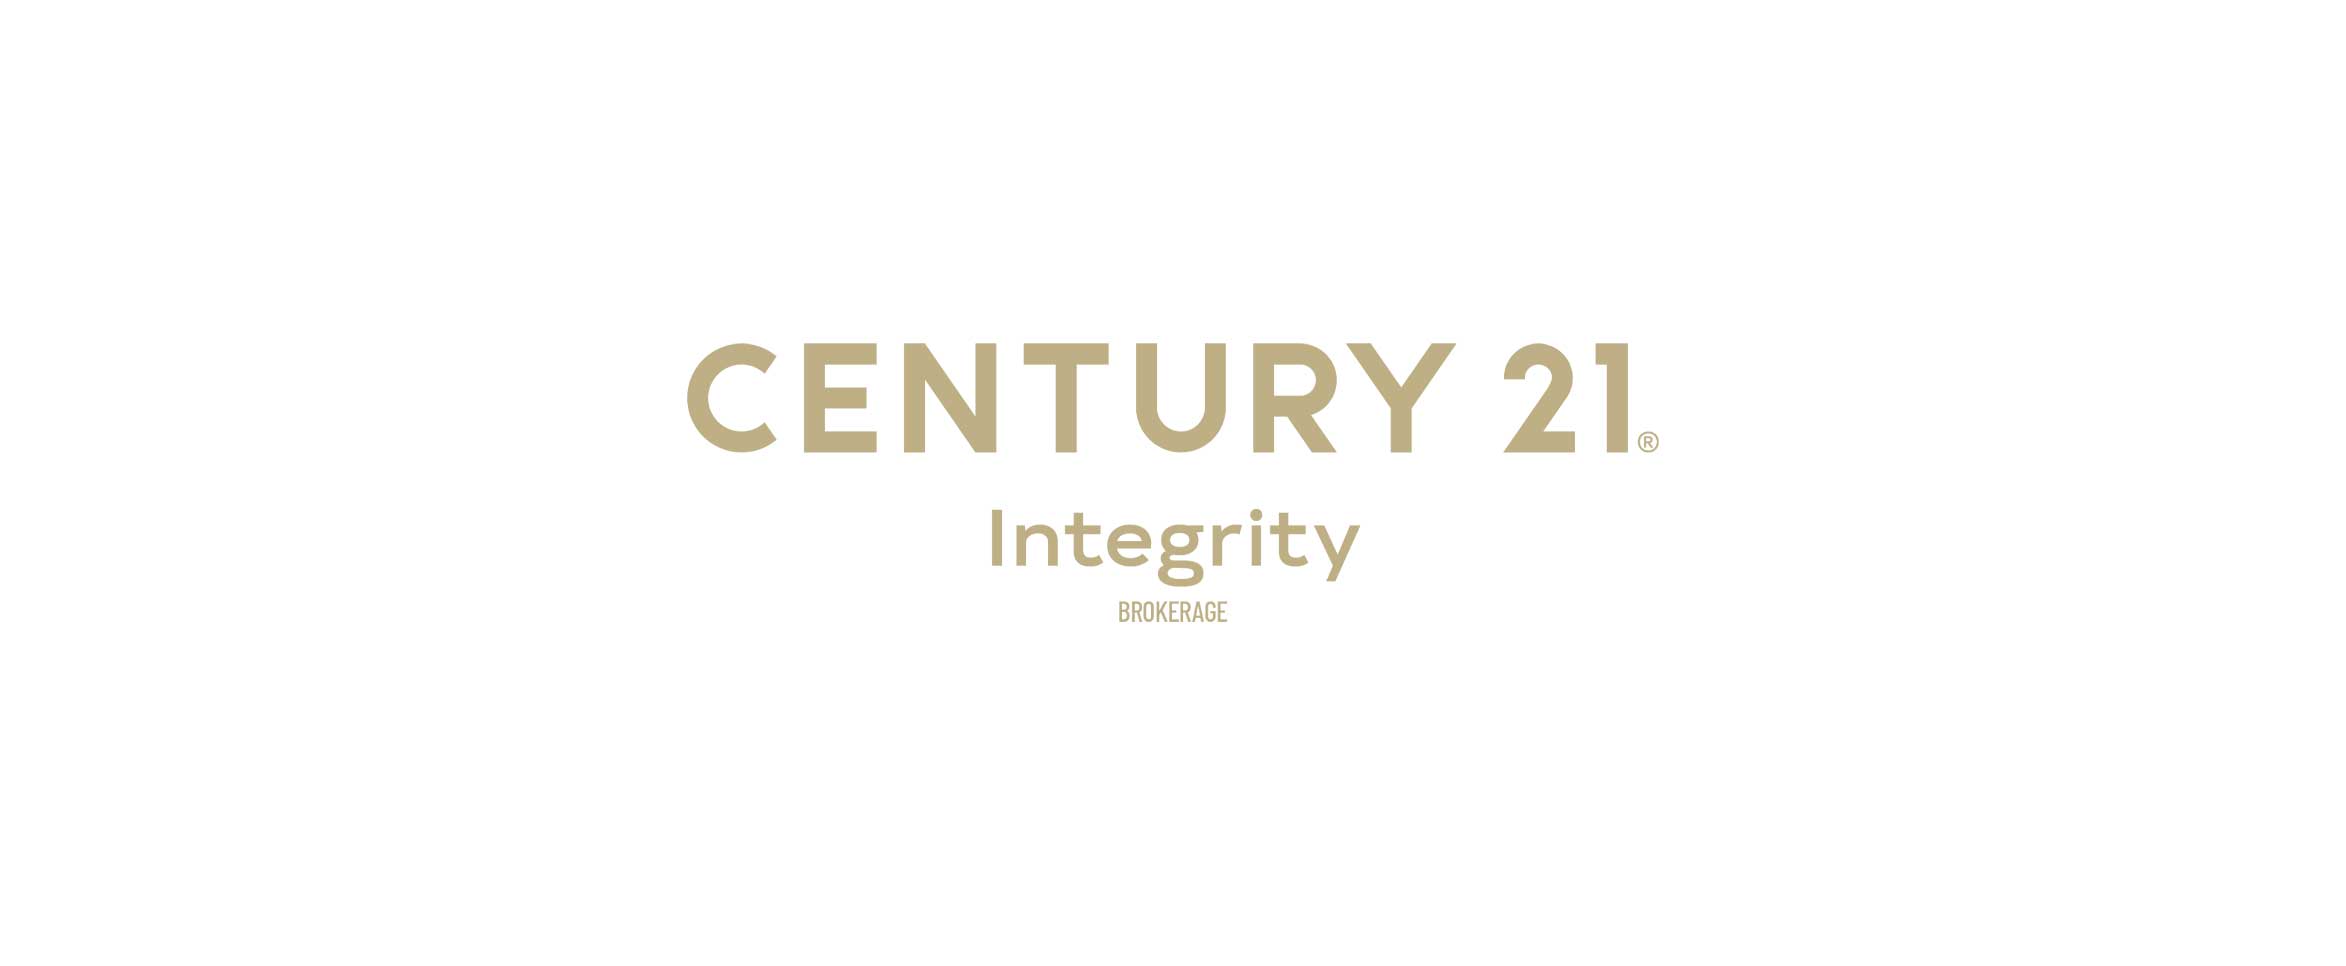 CENTURY 21 Integrity